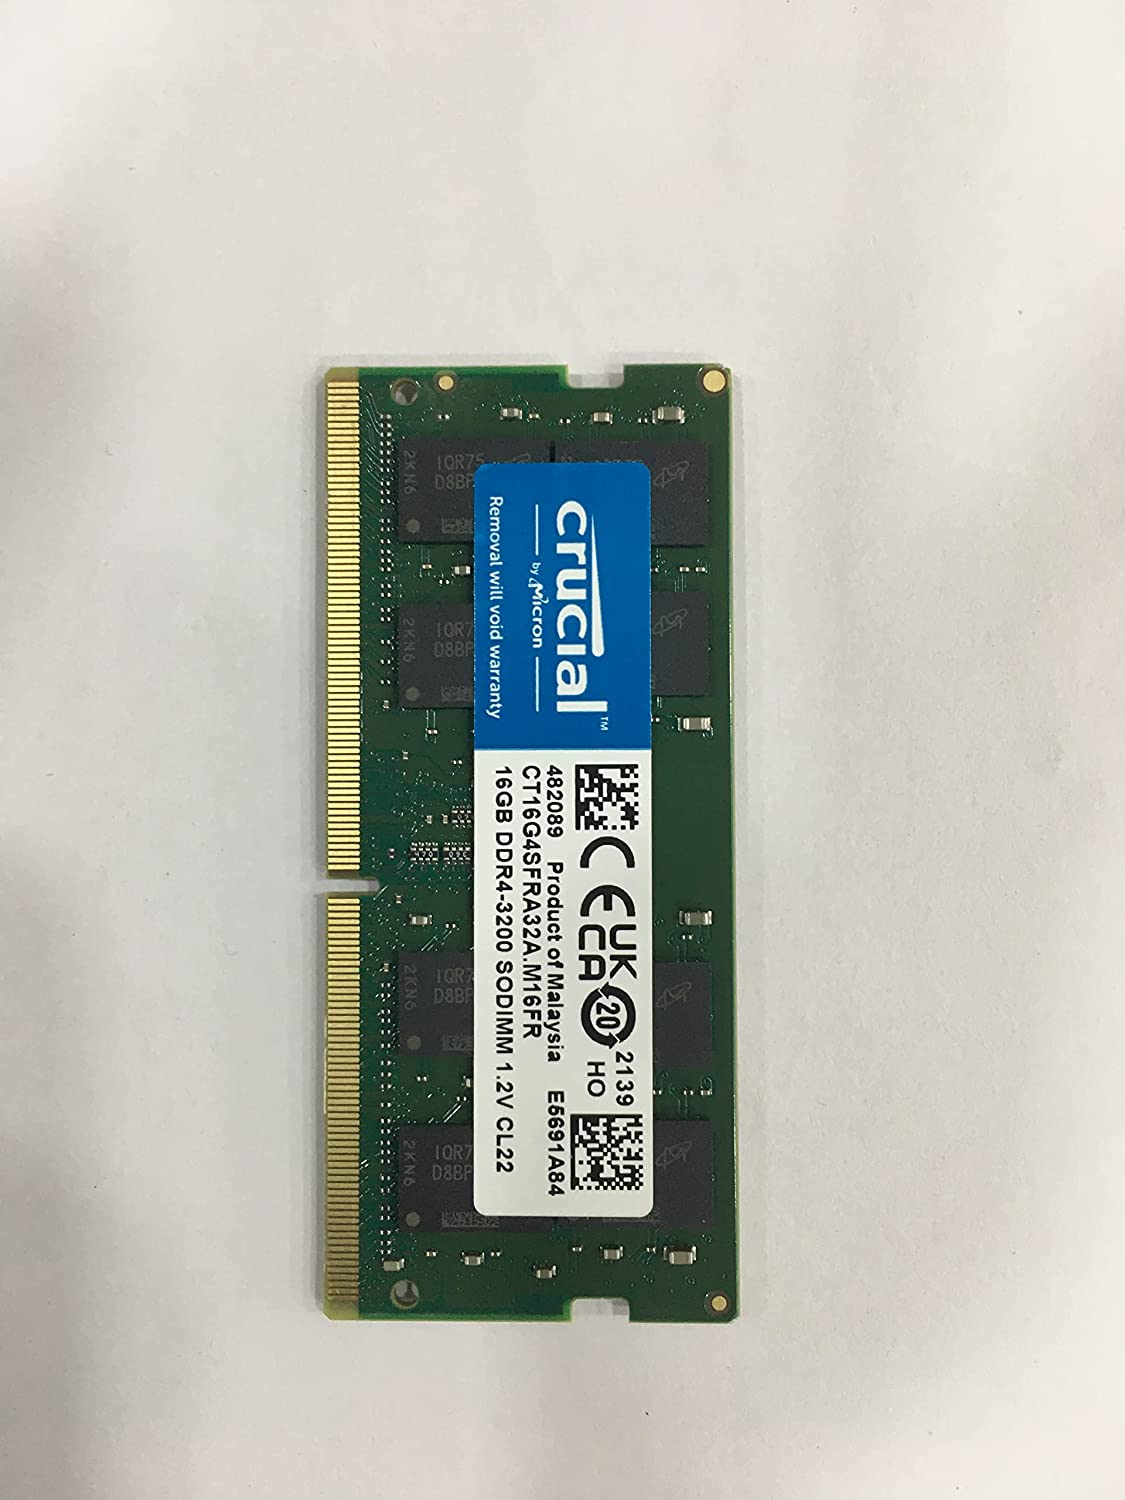 Crucial 16GB Laptop DDR4 3200 MHz SODIMM Memory Kit (2 x 8GB)